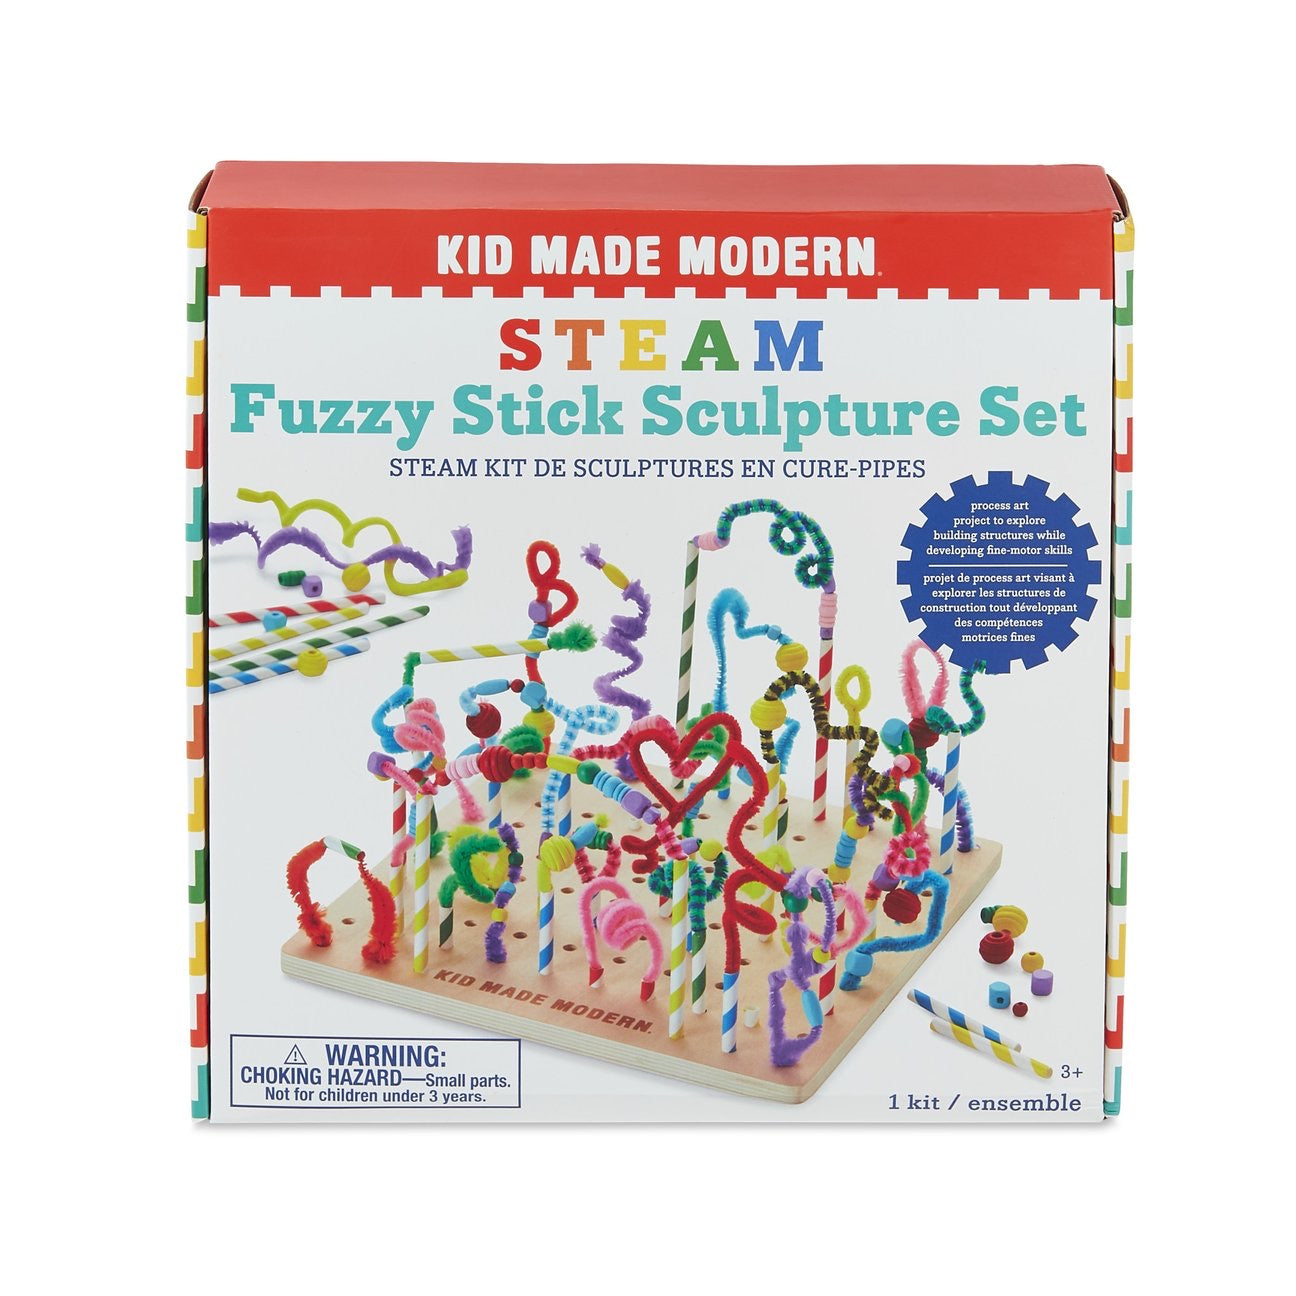 STEAM Fuzzy Stick Sculpture Set - Makes a great gift!